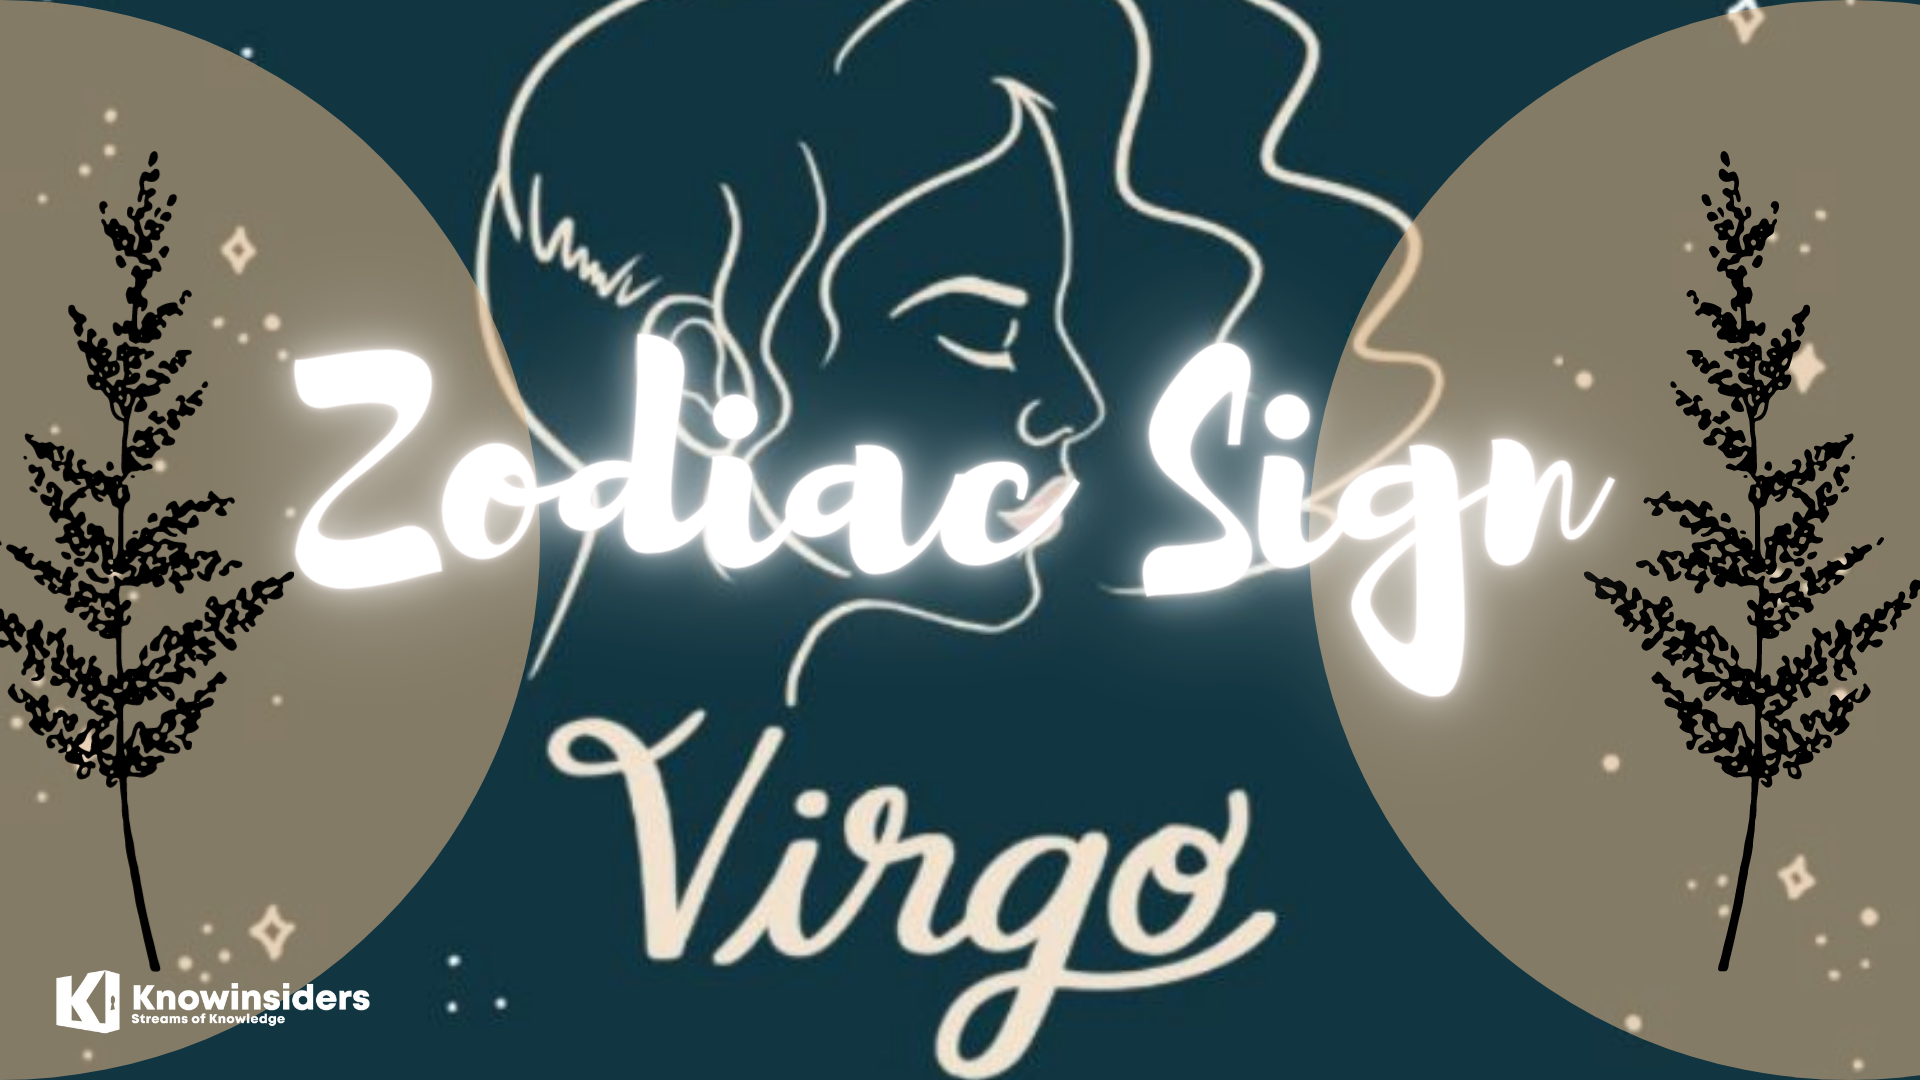 Virgo Zodiac Sign Horoscope. Photo: knowinsiders.